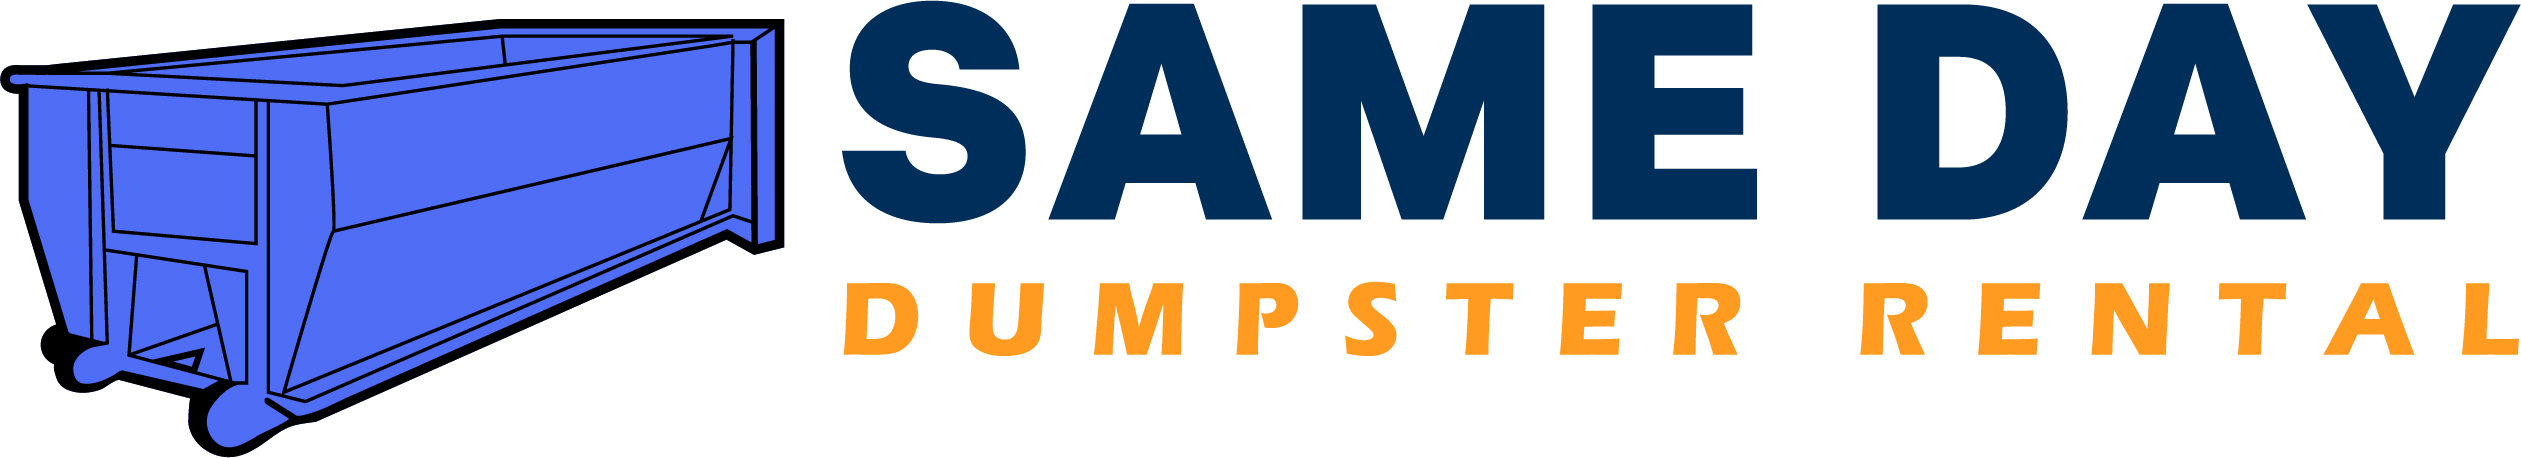 Company Logo For Same Day Dumpster Rental San Francisco'